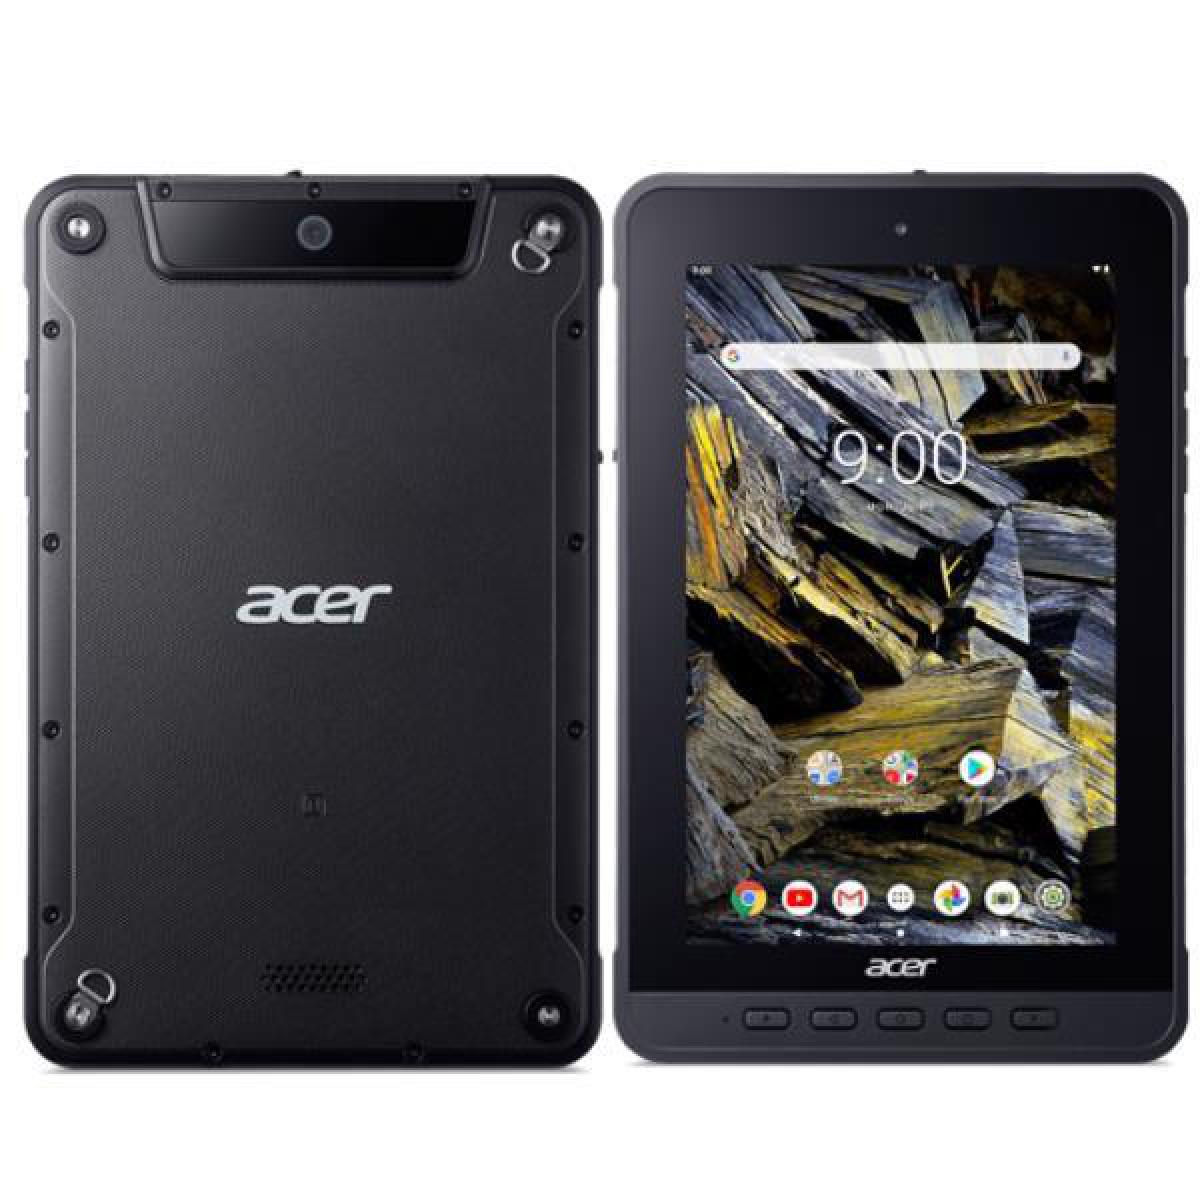 Acer - Et108-11a Mt8385 4/64 8ips Nfc Andr - Tablette Windows